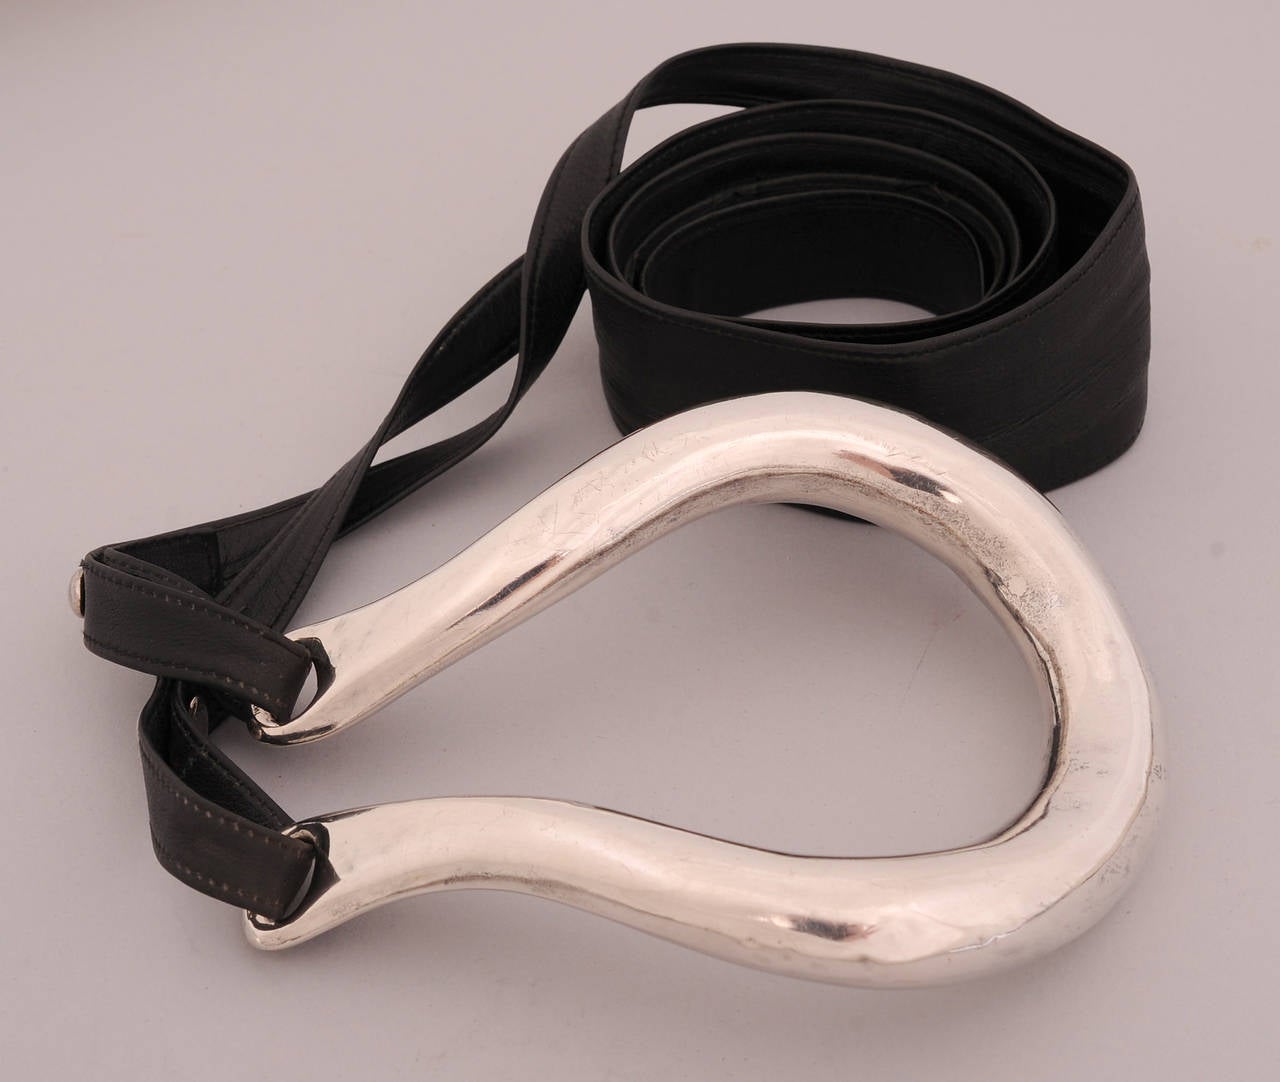 halston belt buckle